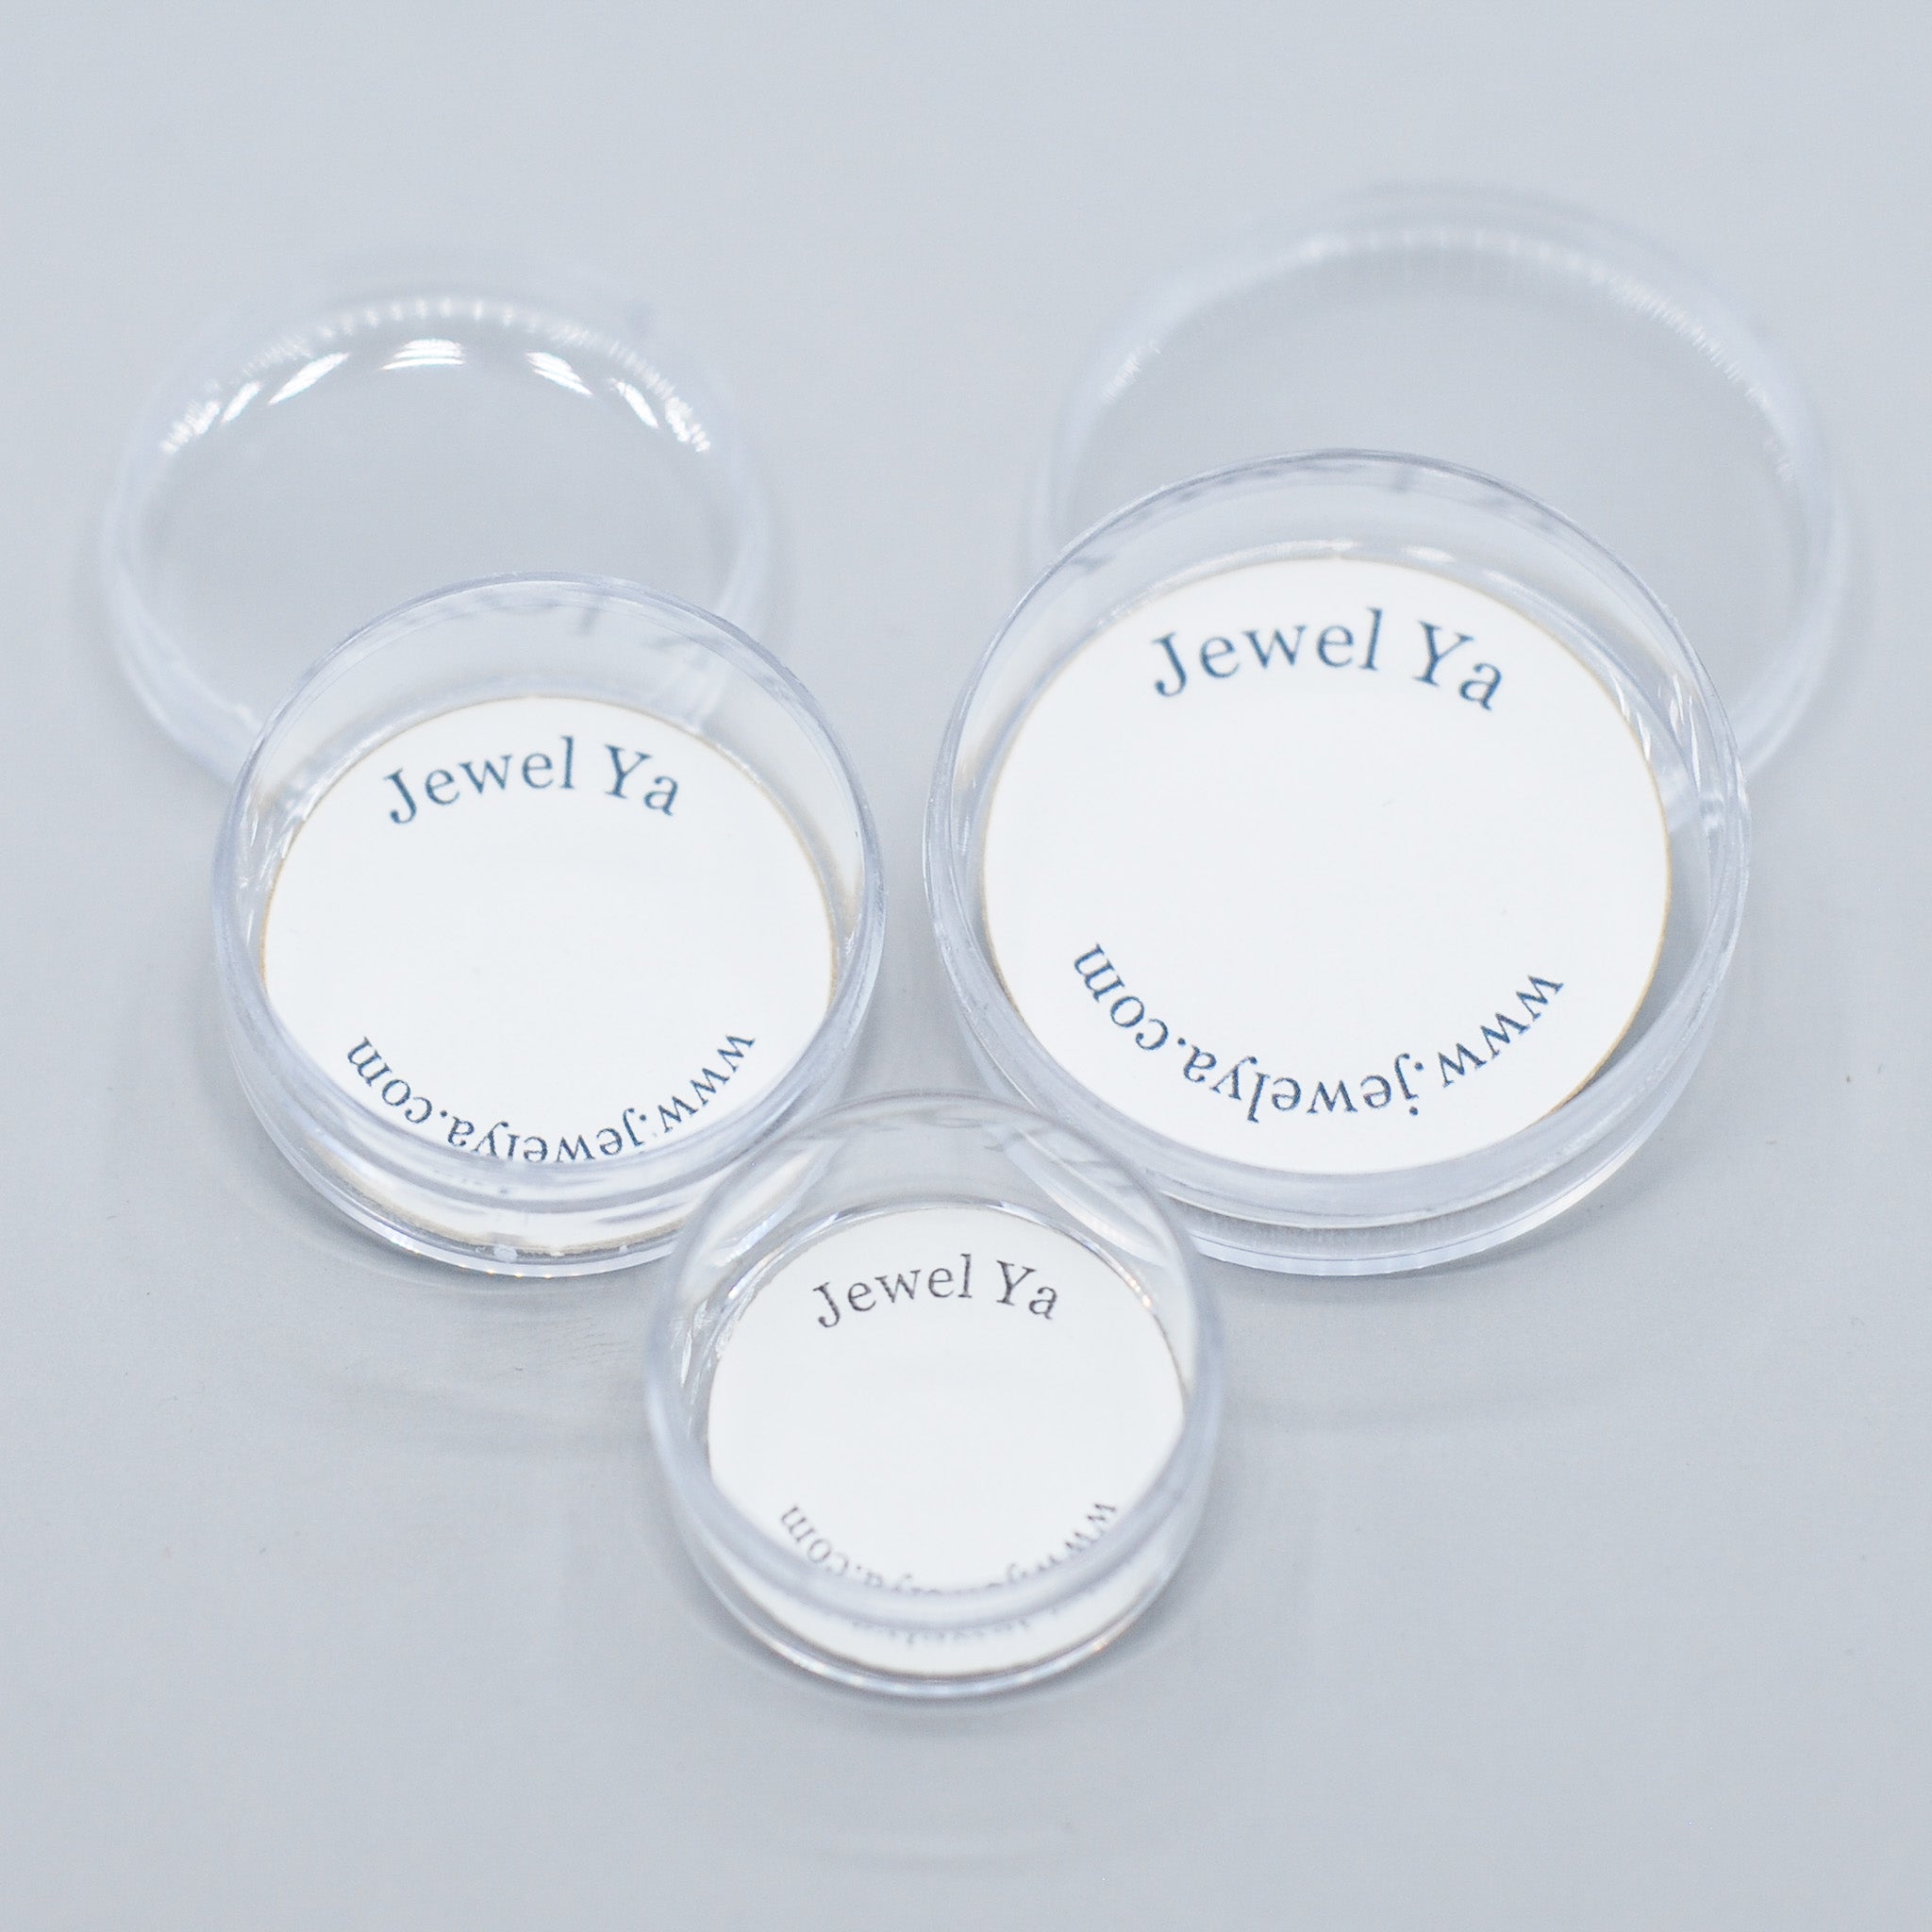 4mm Beaded Lux Initial Bracelet Set - Jewel Ya